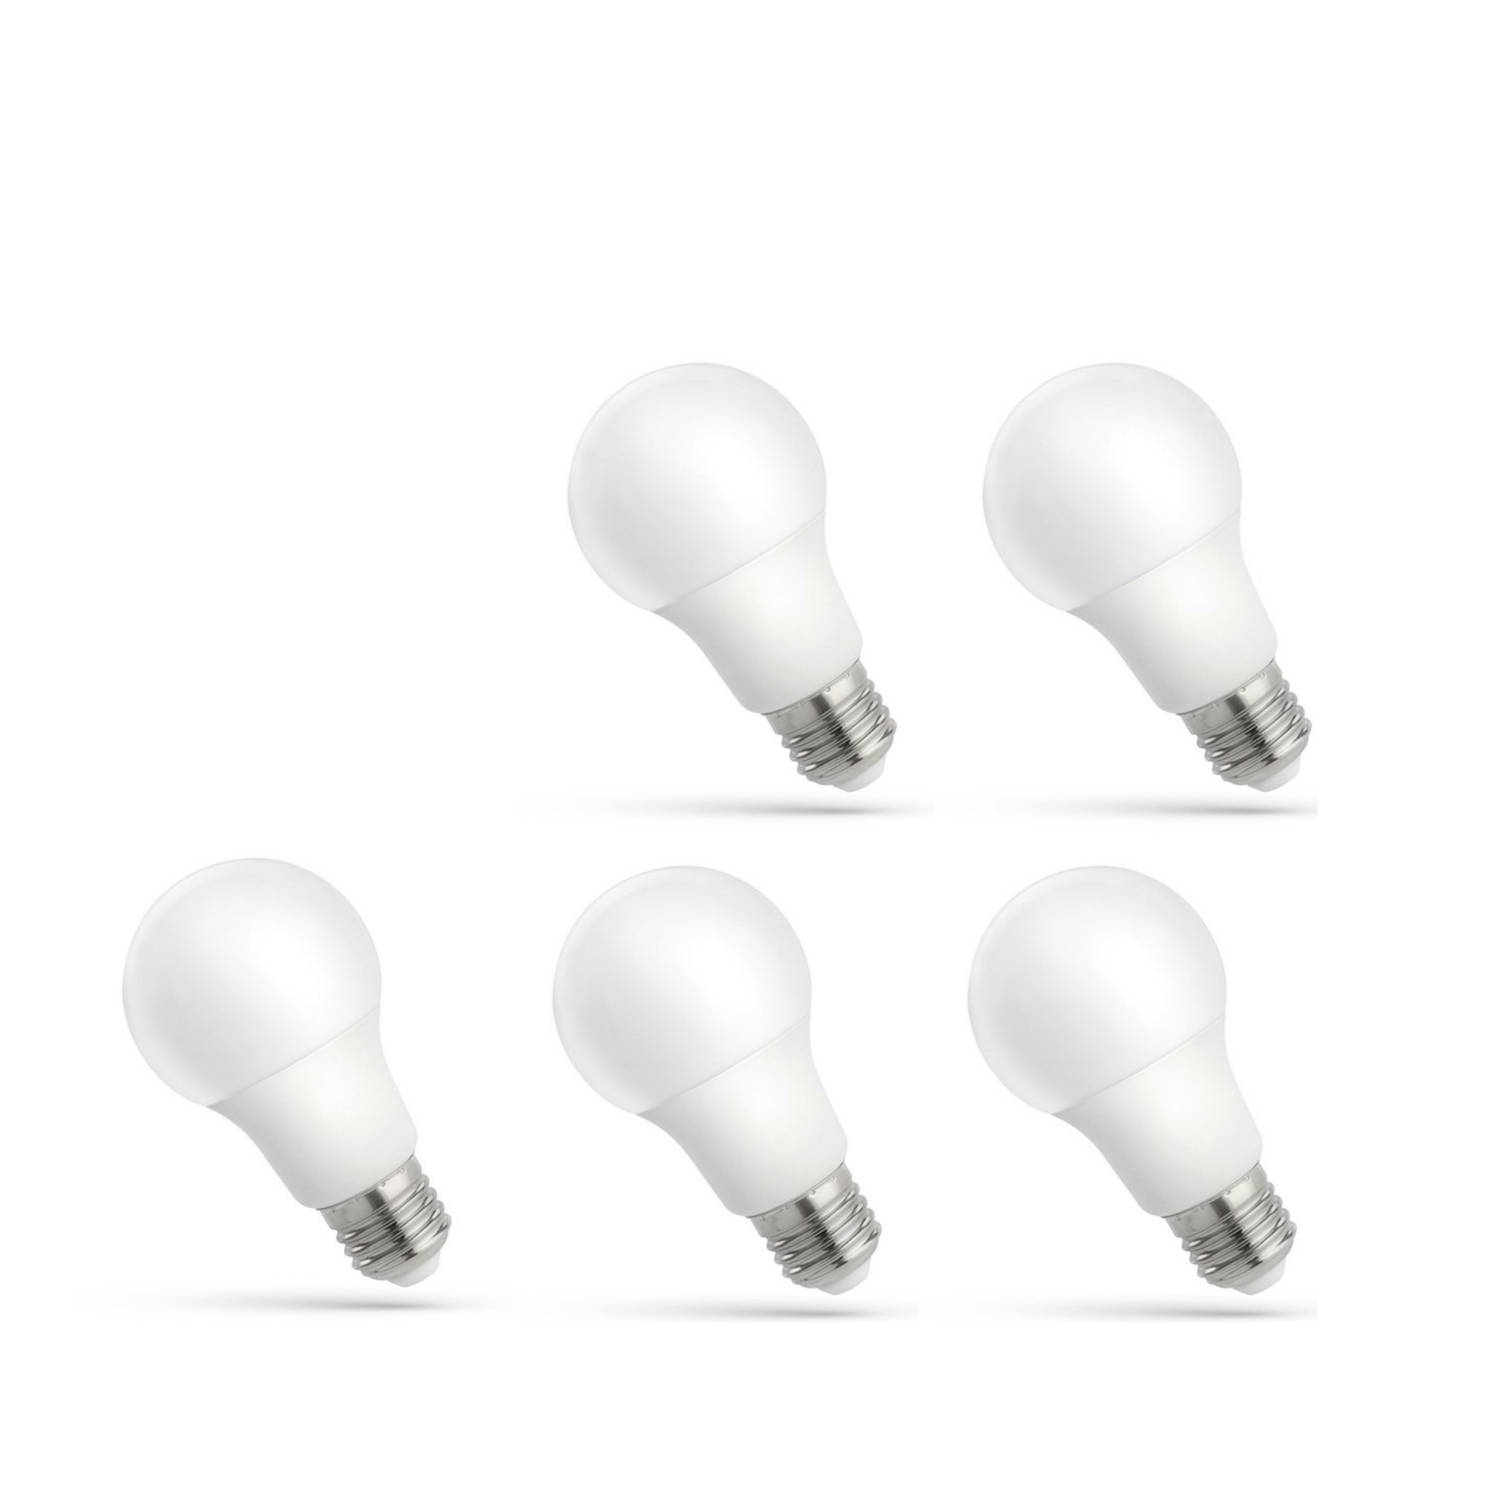 Proventa Super LED-Lamp E27 - 12W/75W - 1155 lm - Daglicht 6500K - 5 ledlampen